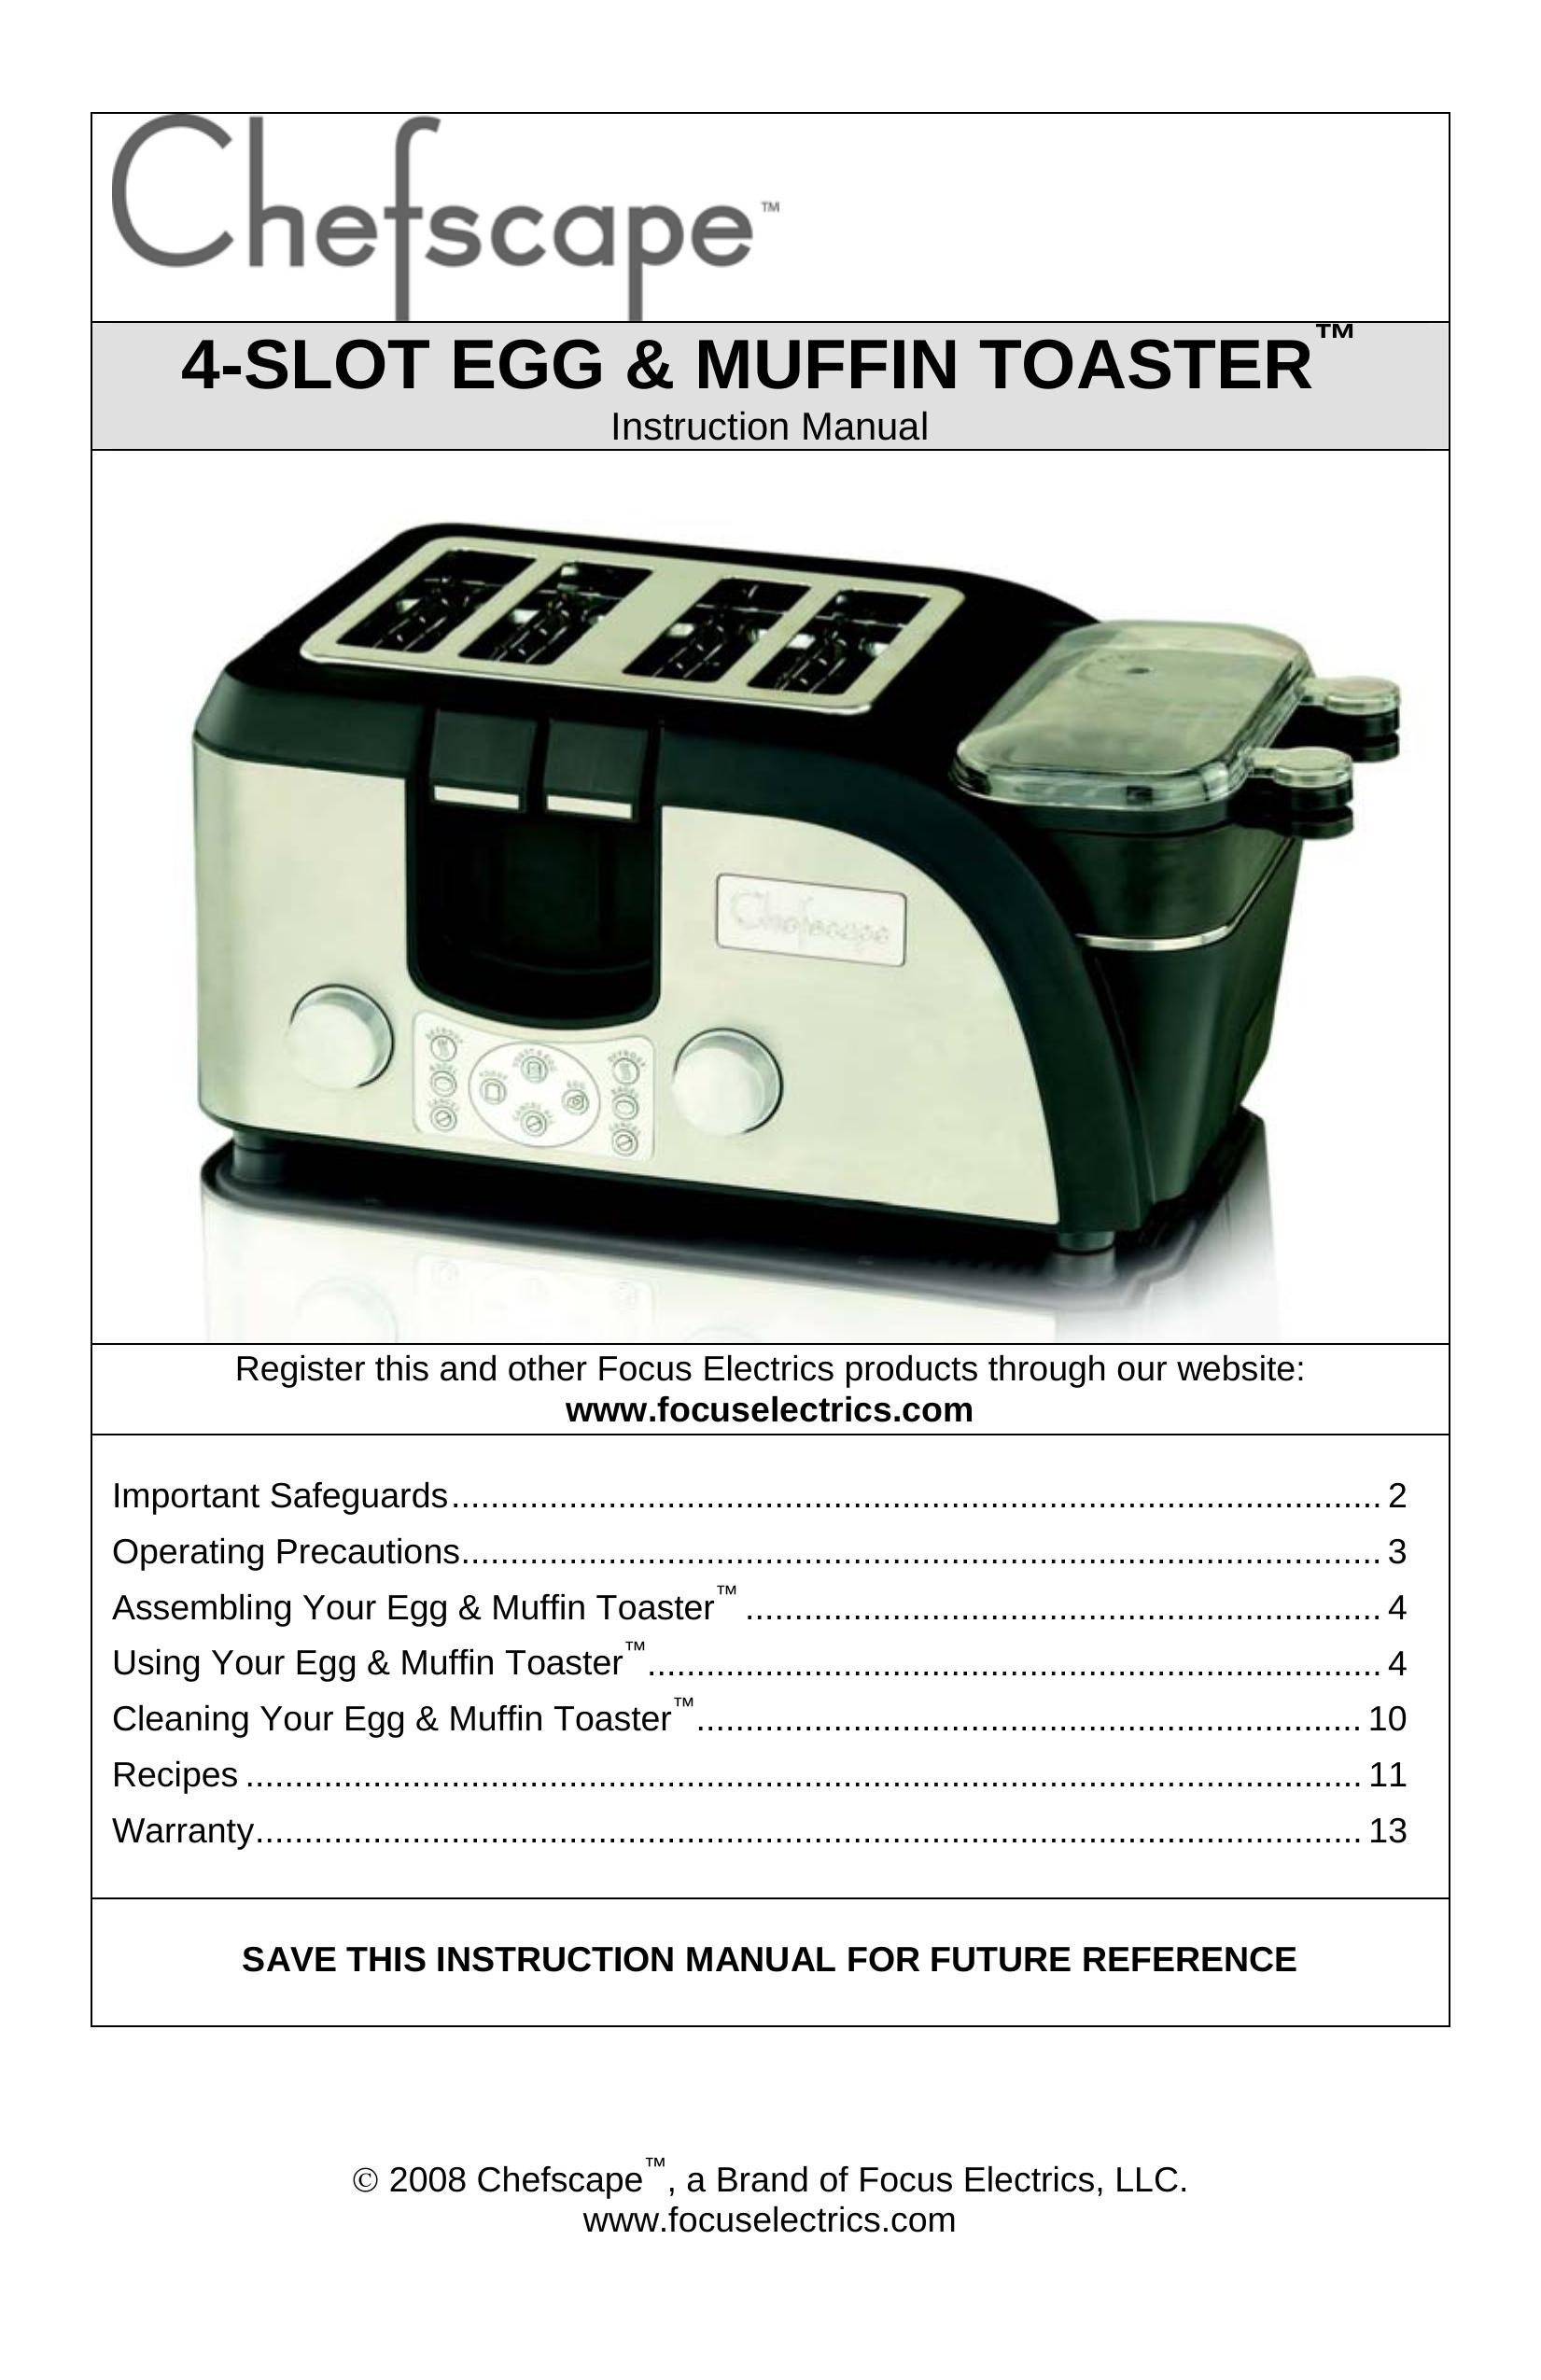 West Bend TEMPR Toaster User Manual